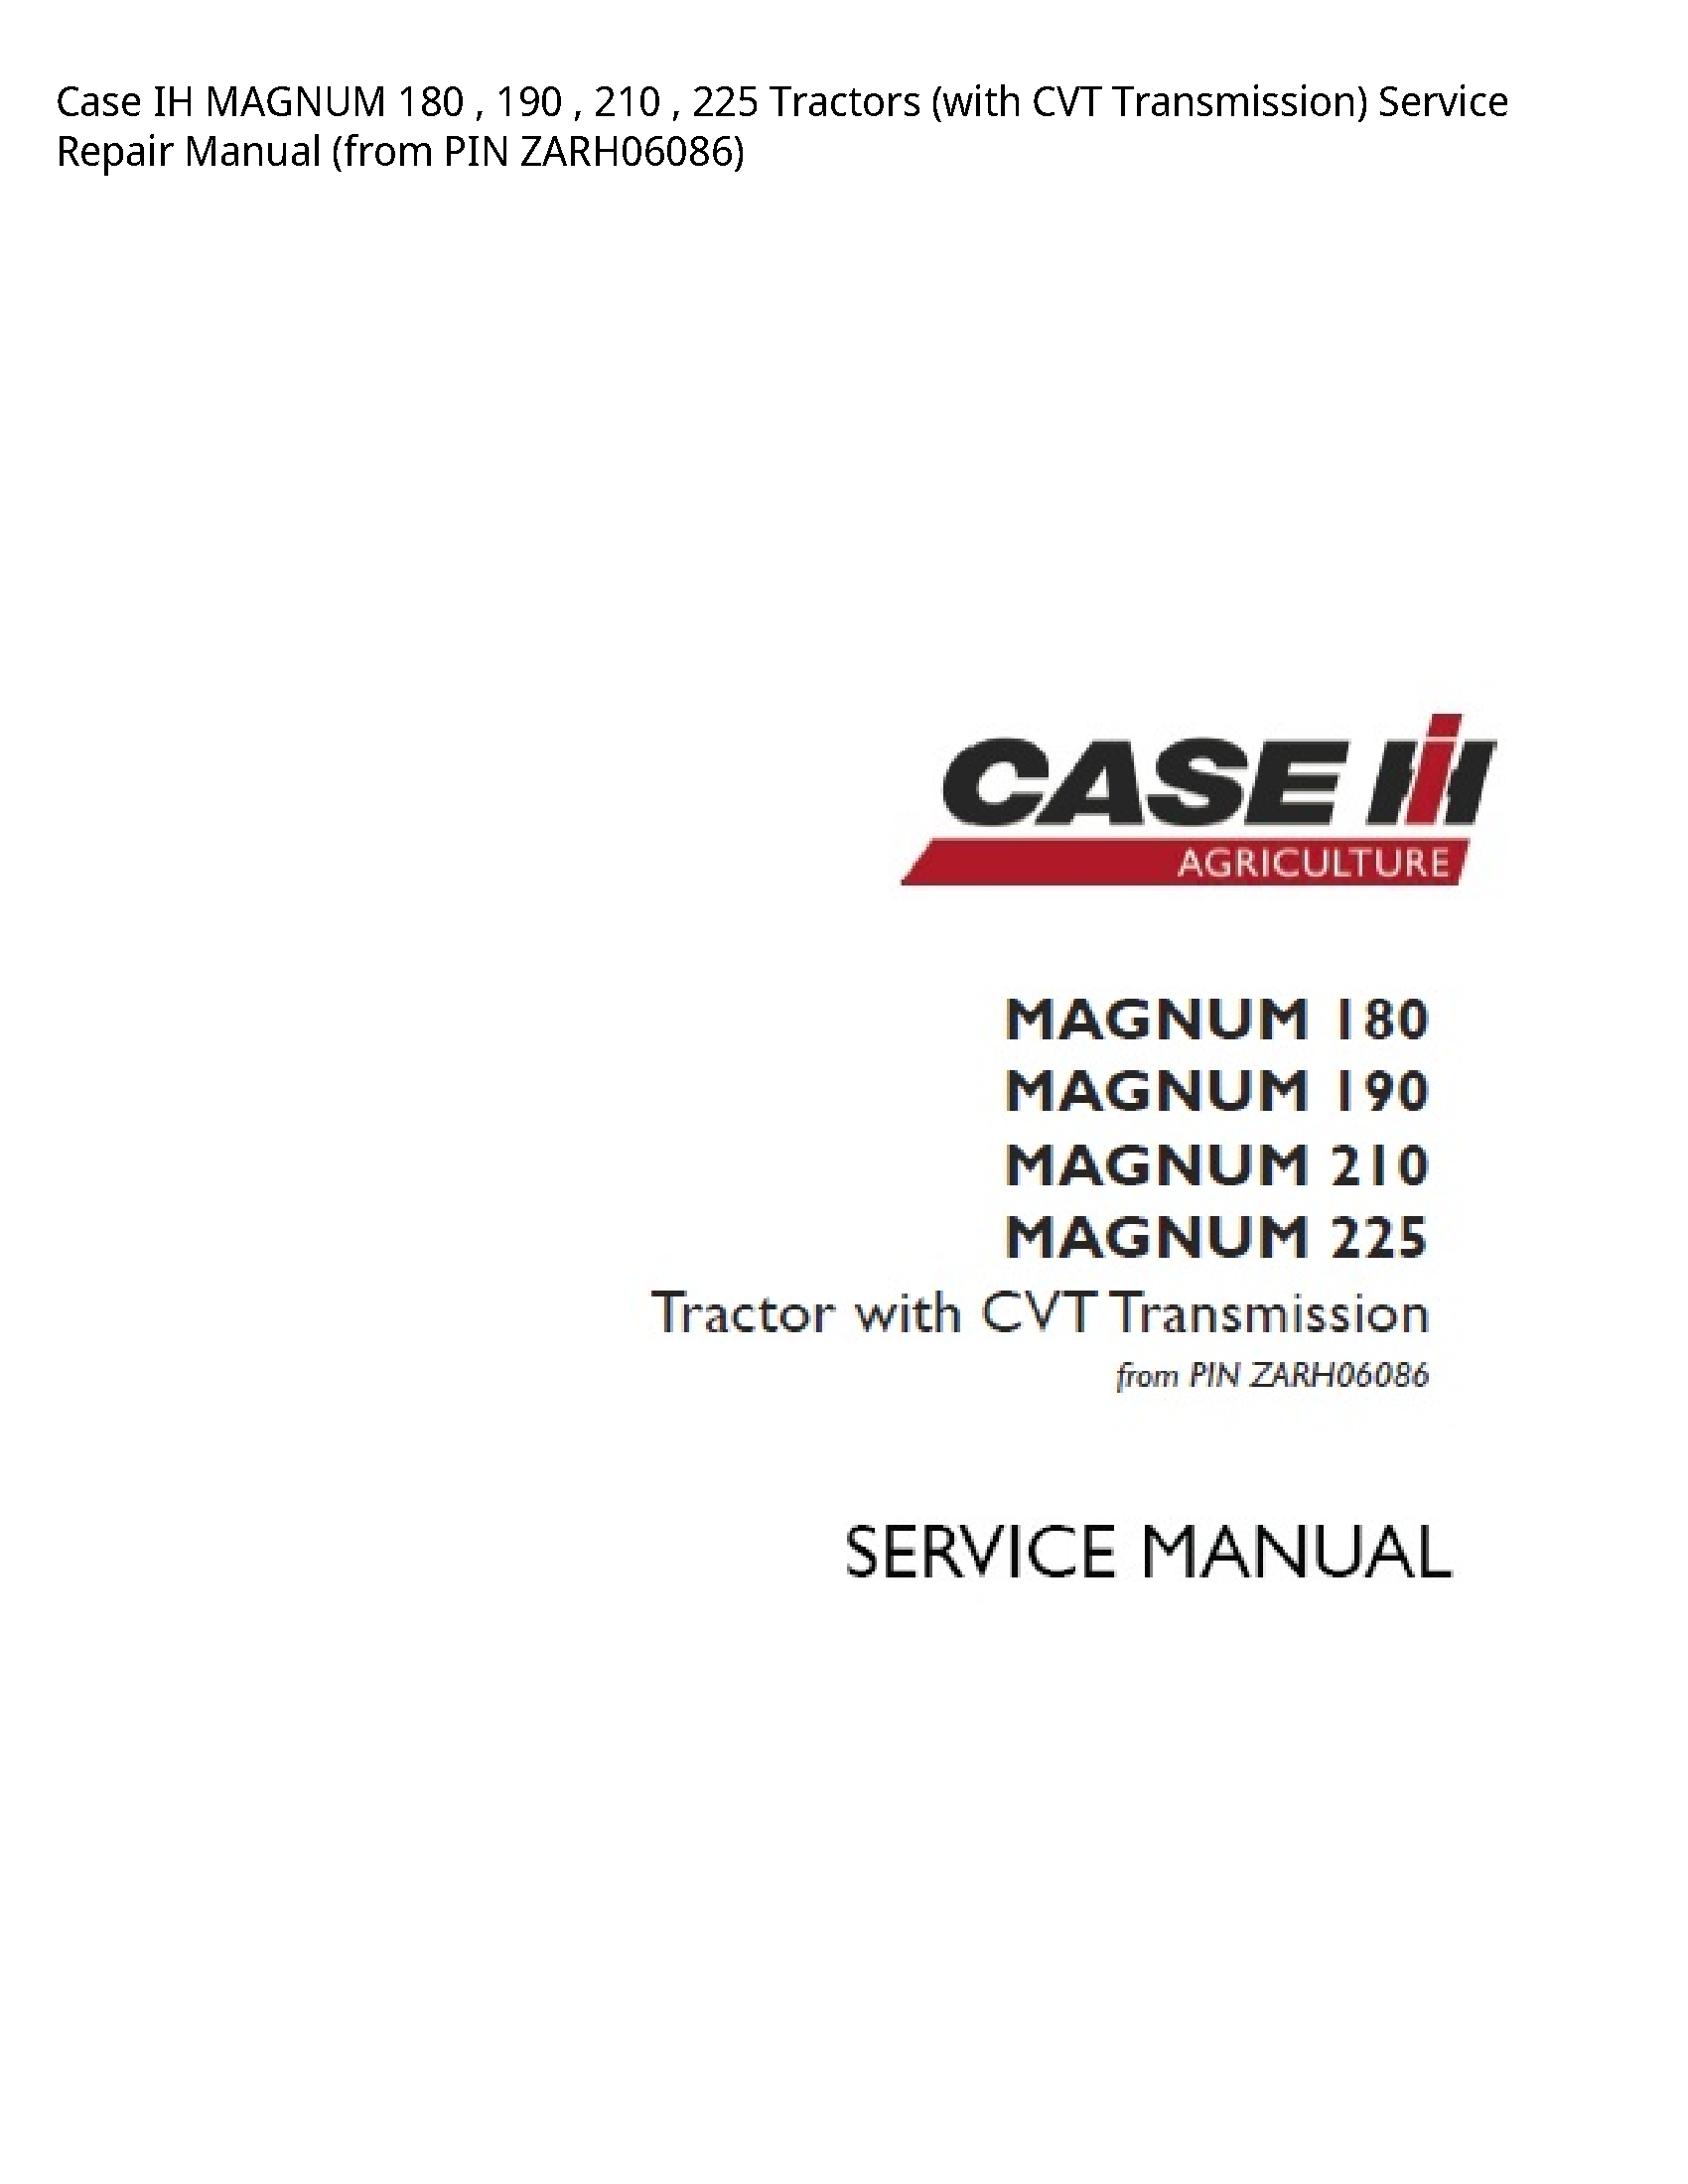 Case/Case IH 180 IH MAGNUM Tractors (with CVT Transmission) manual